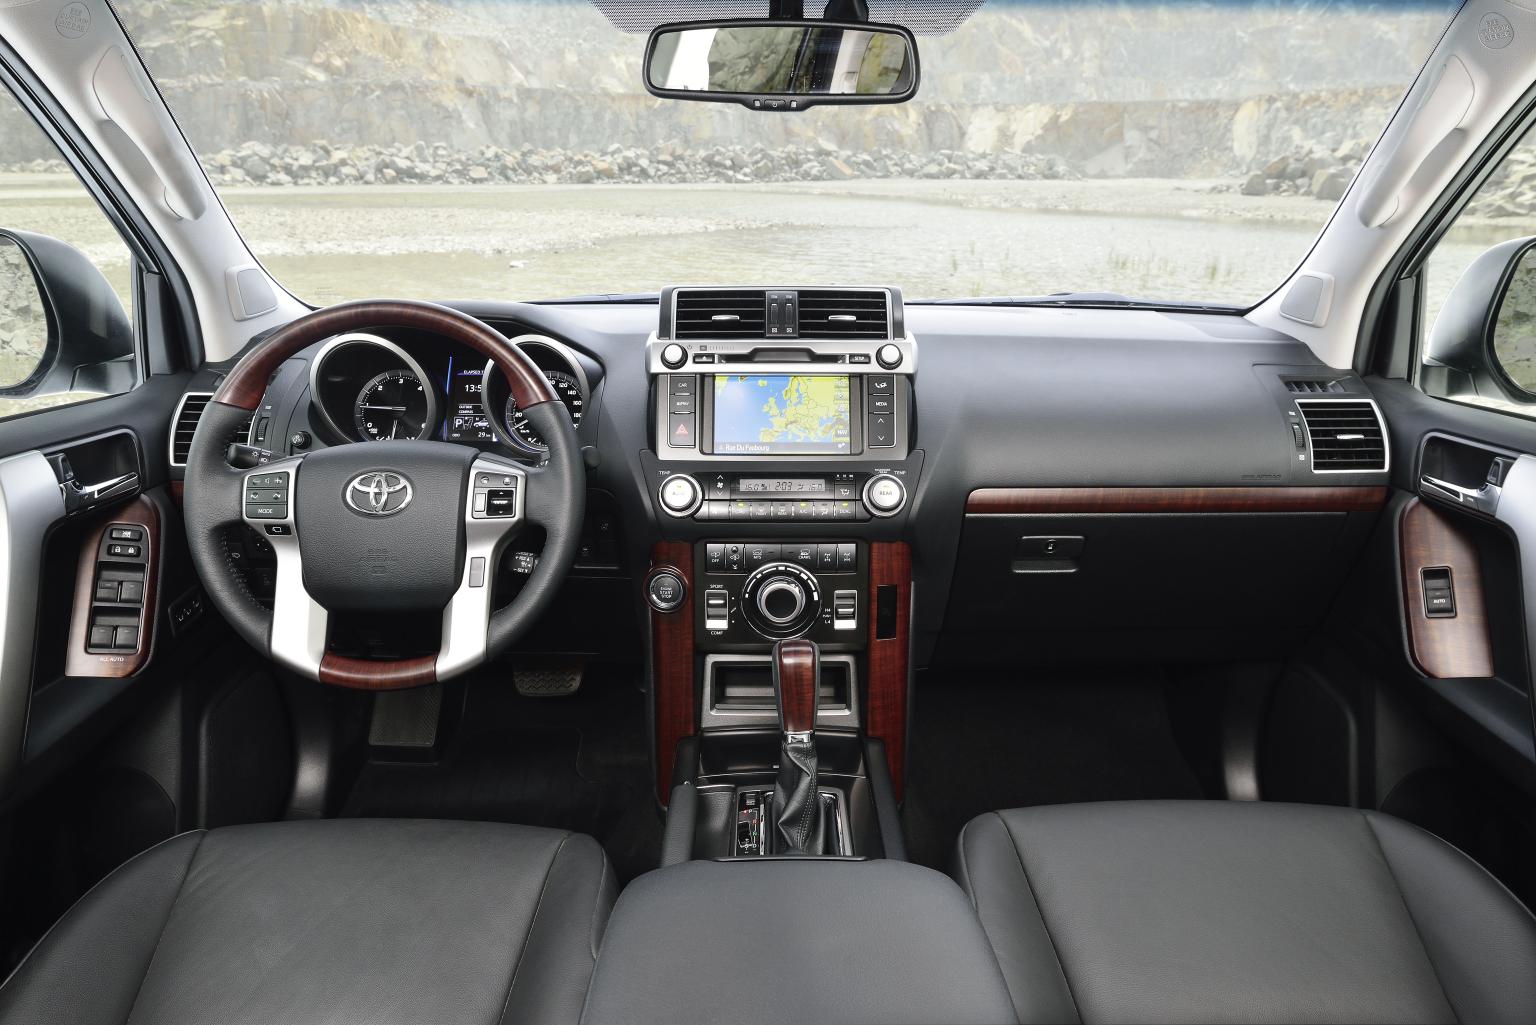 HQ 2014 Toyota Land Cruiser Wallpapers | File 189.35Kb